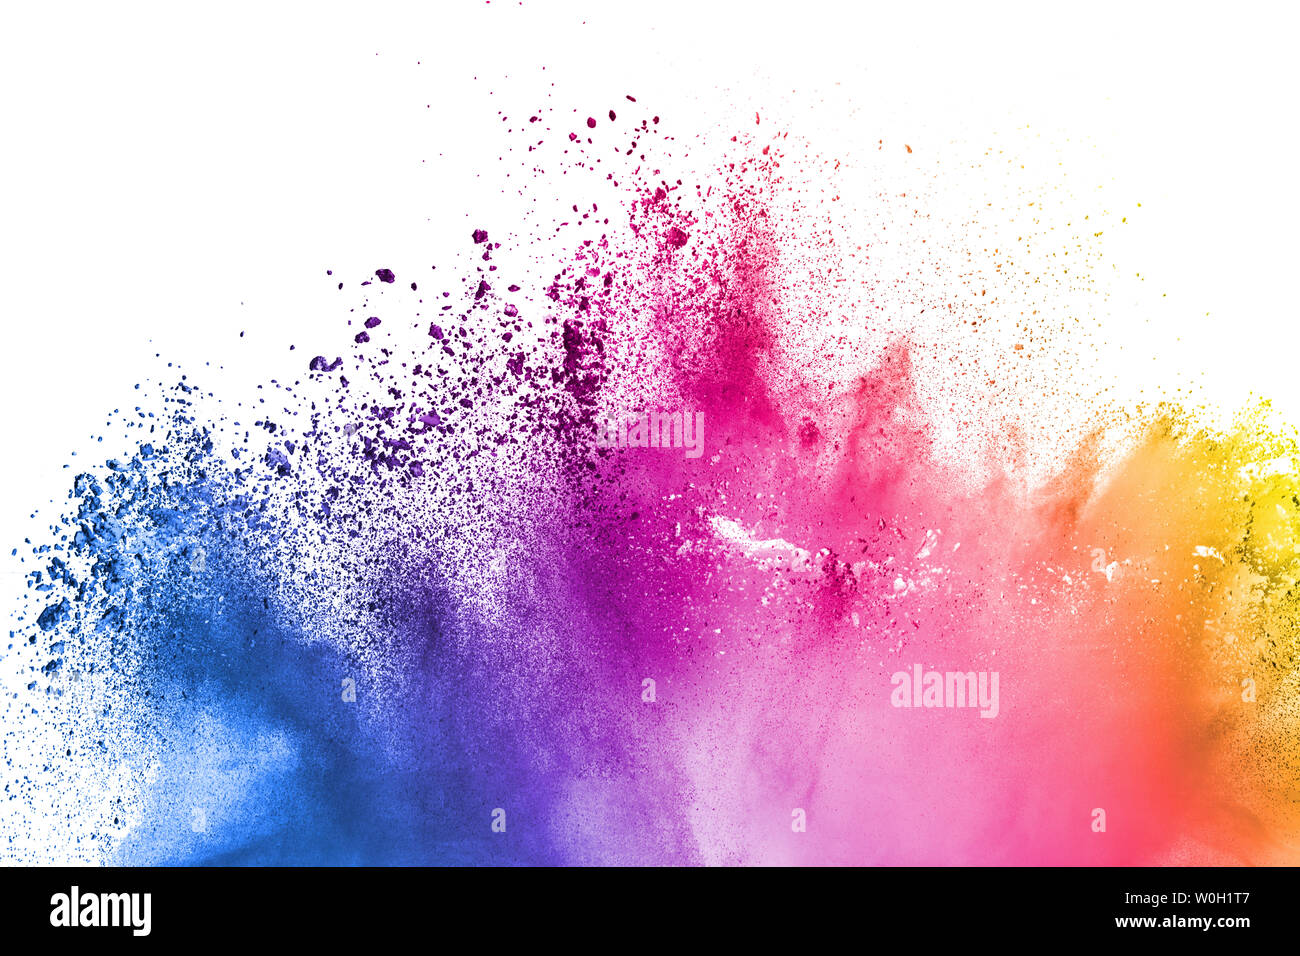 https://c8.alamy.com/comp/W0H1T7/multi-color-powder-explosion-on-white-background-W0H1T7.jpg